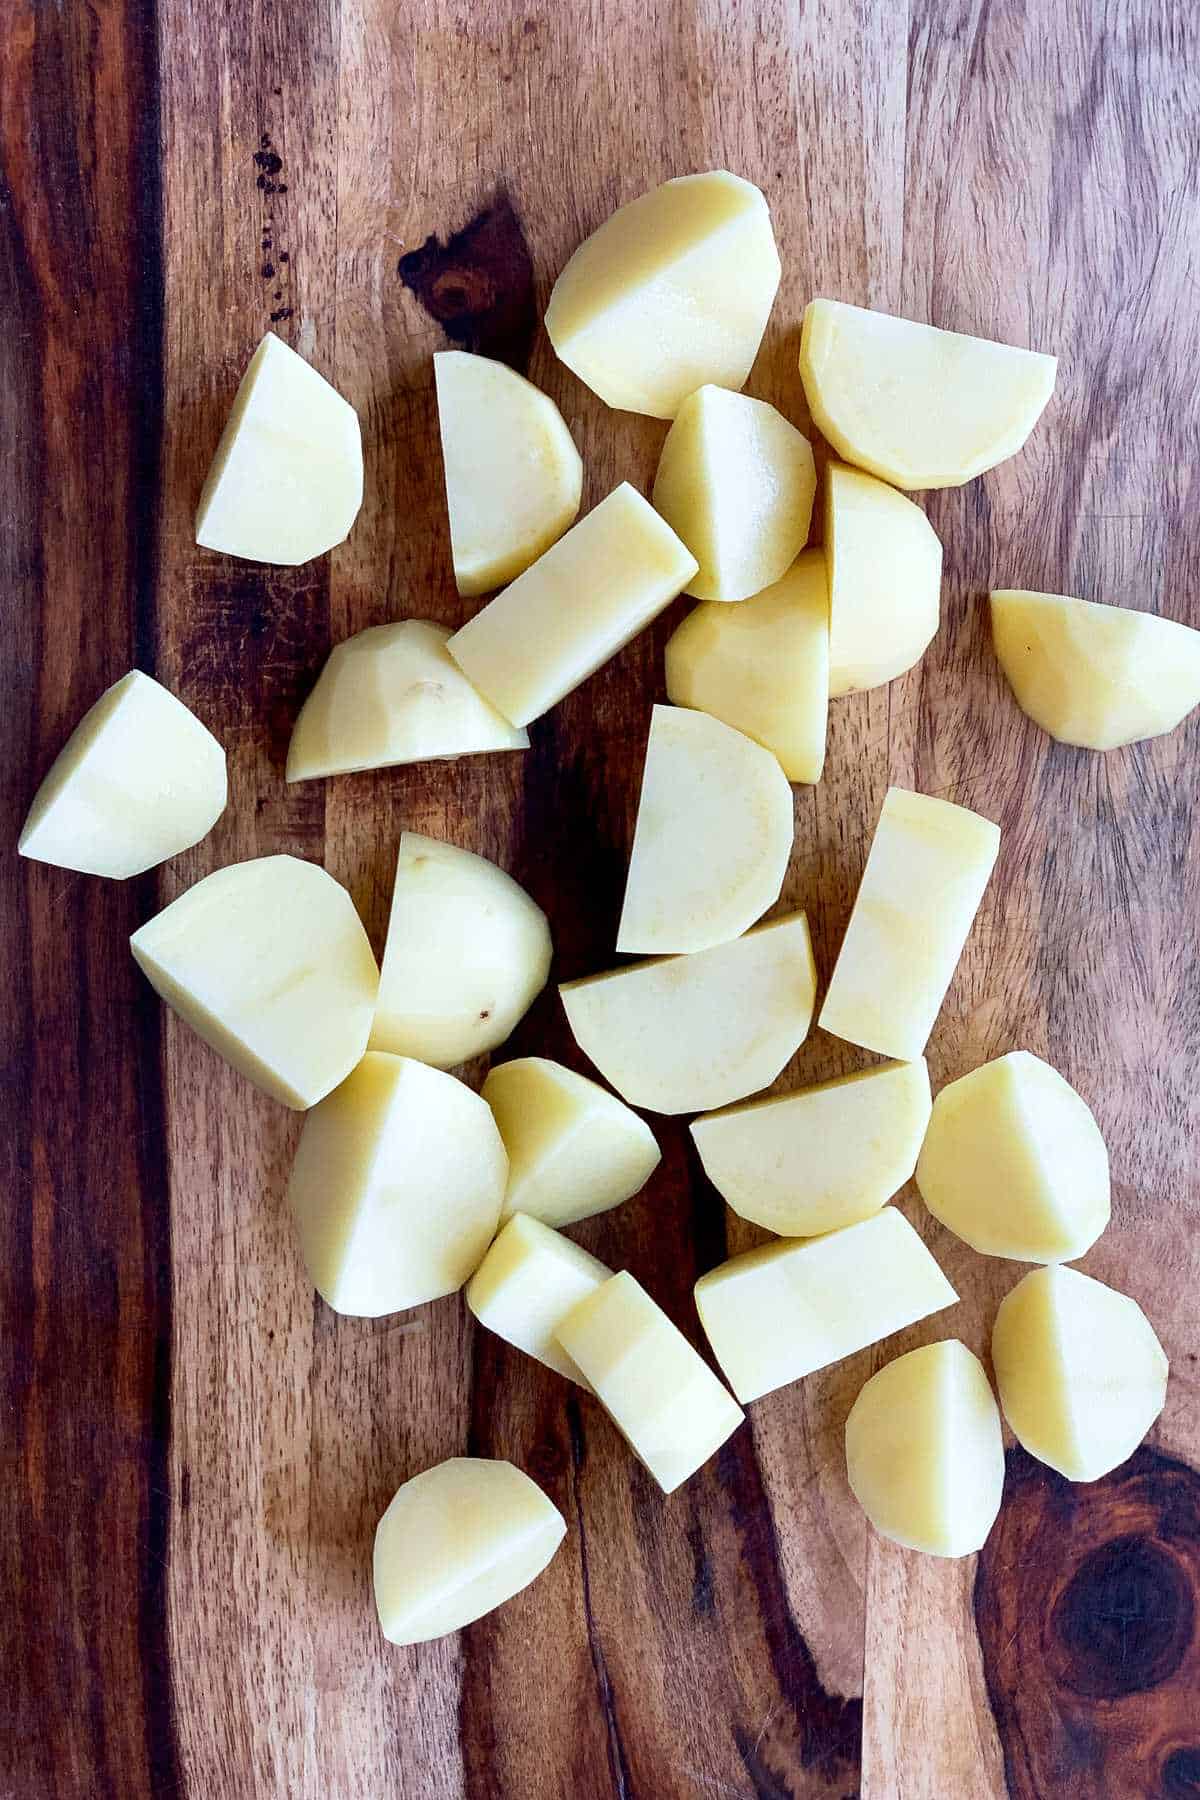 Potato cut in pieces.